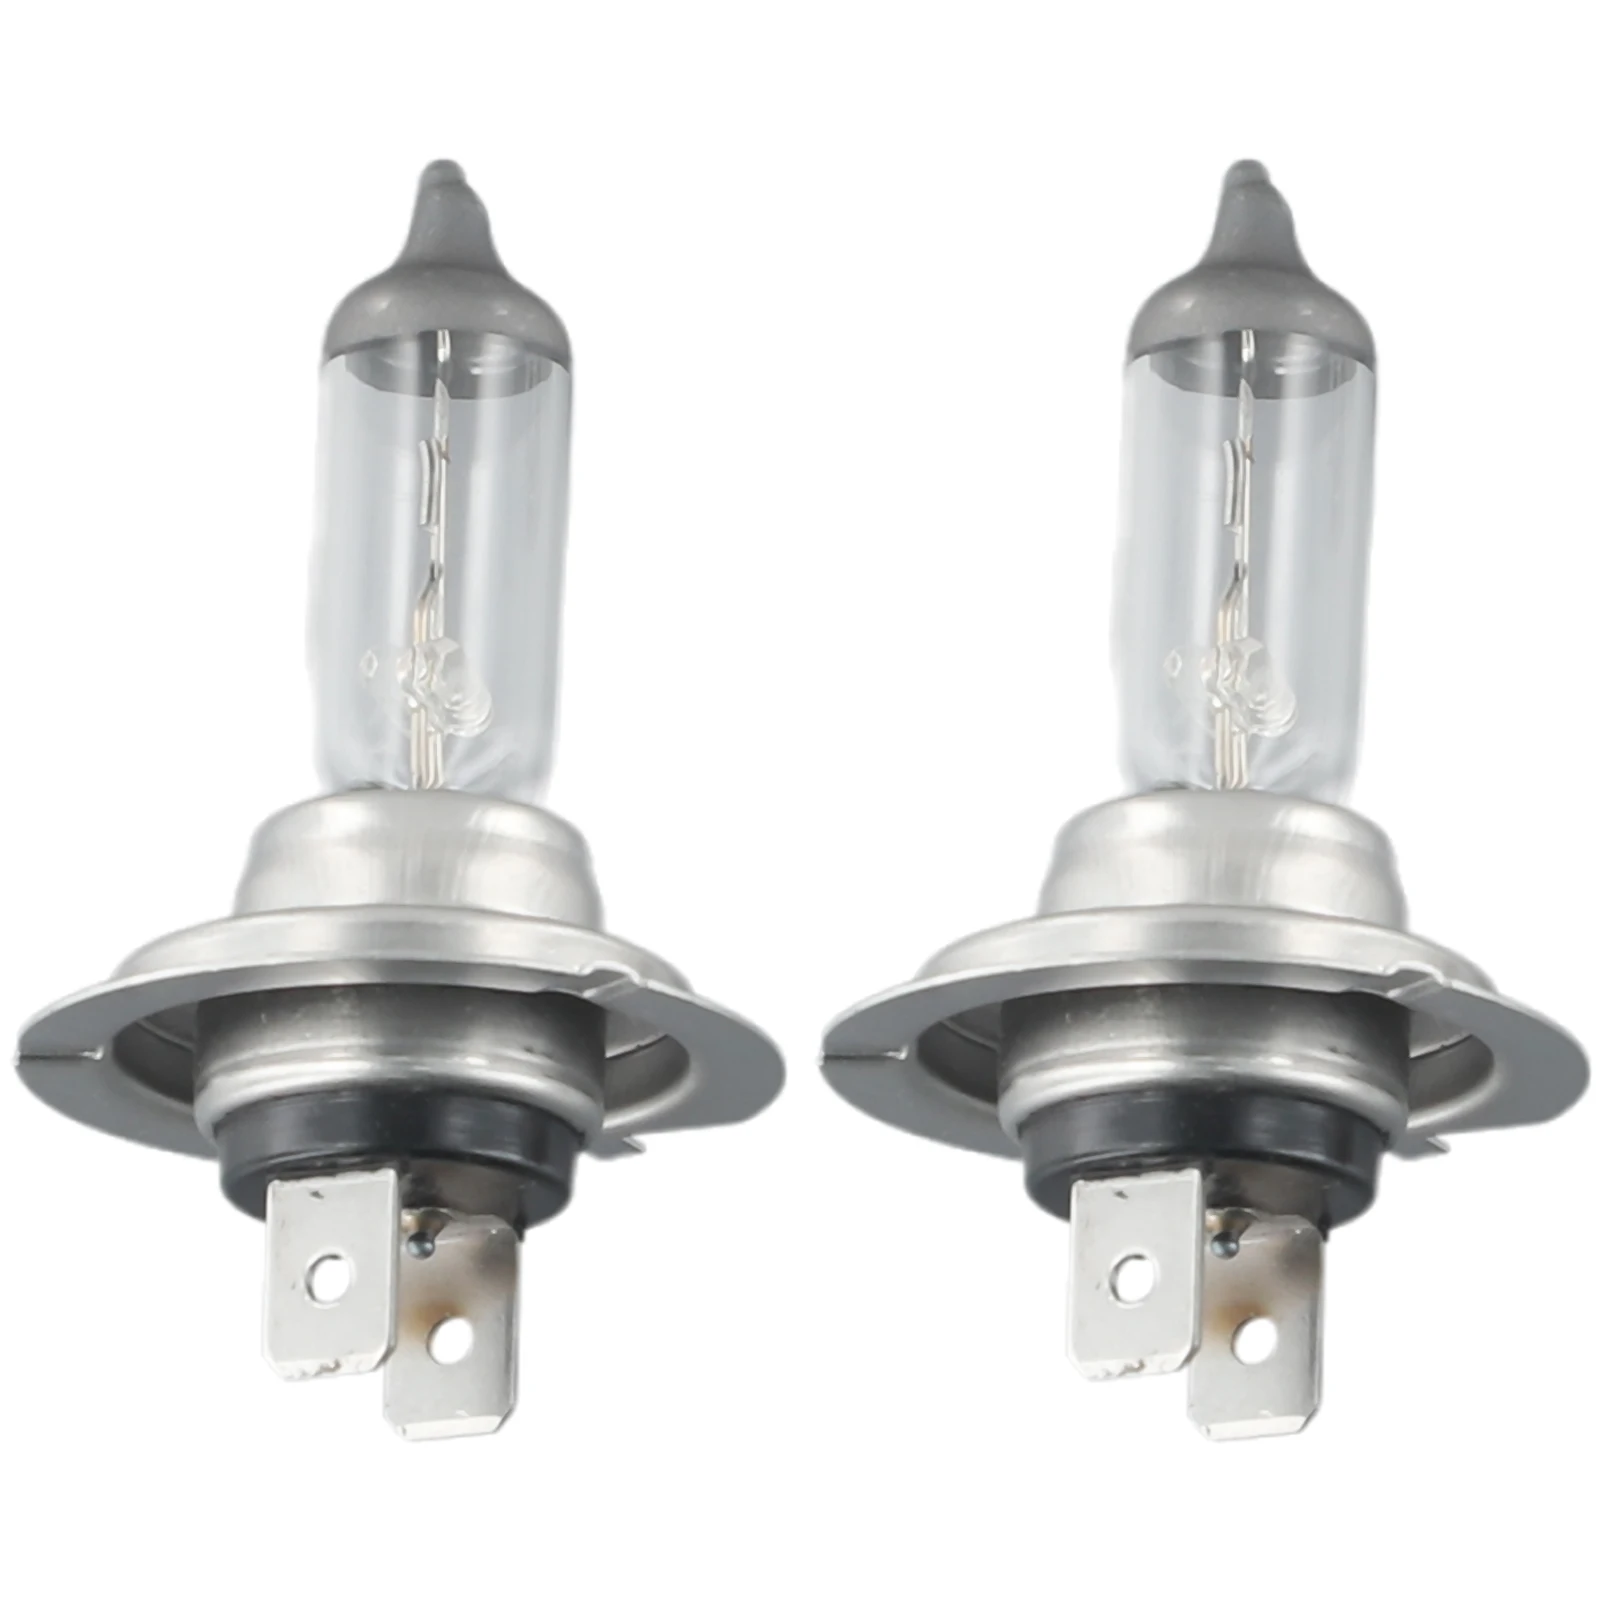 

2* Car H7 Xenon Halogen Headlight Bulbs 12V 55W 6000K White Car High / Low Beam Light Headlight Bulbs Replacement Super Bright